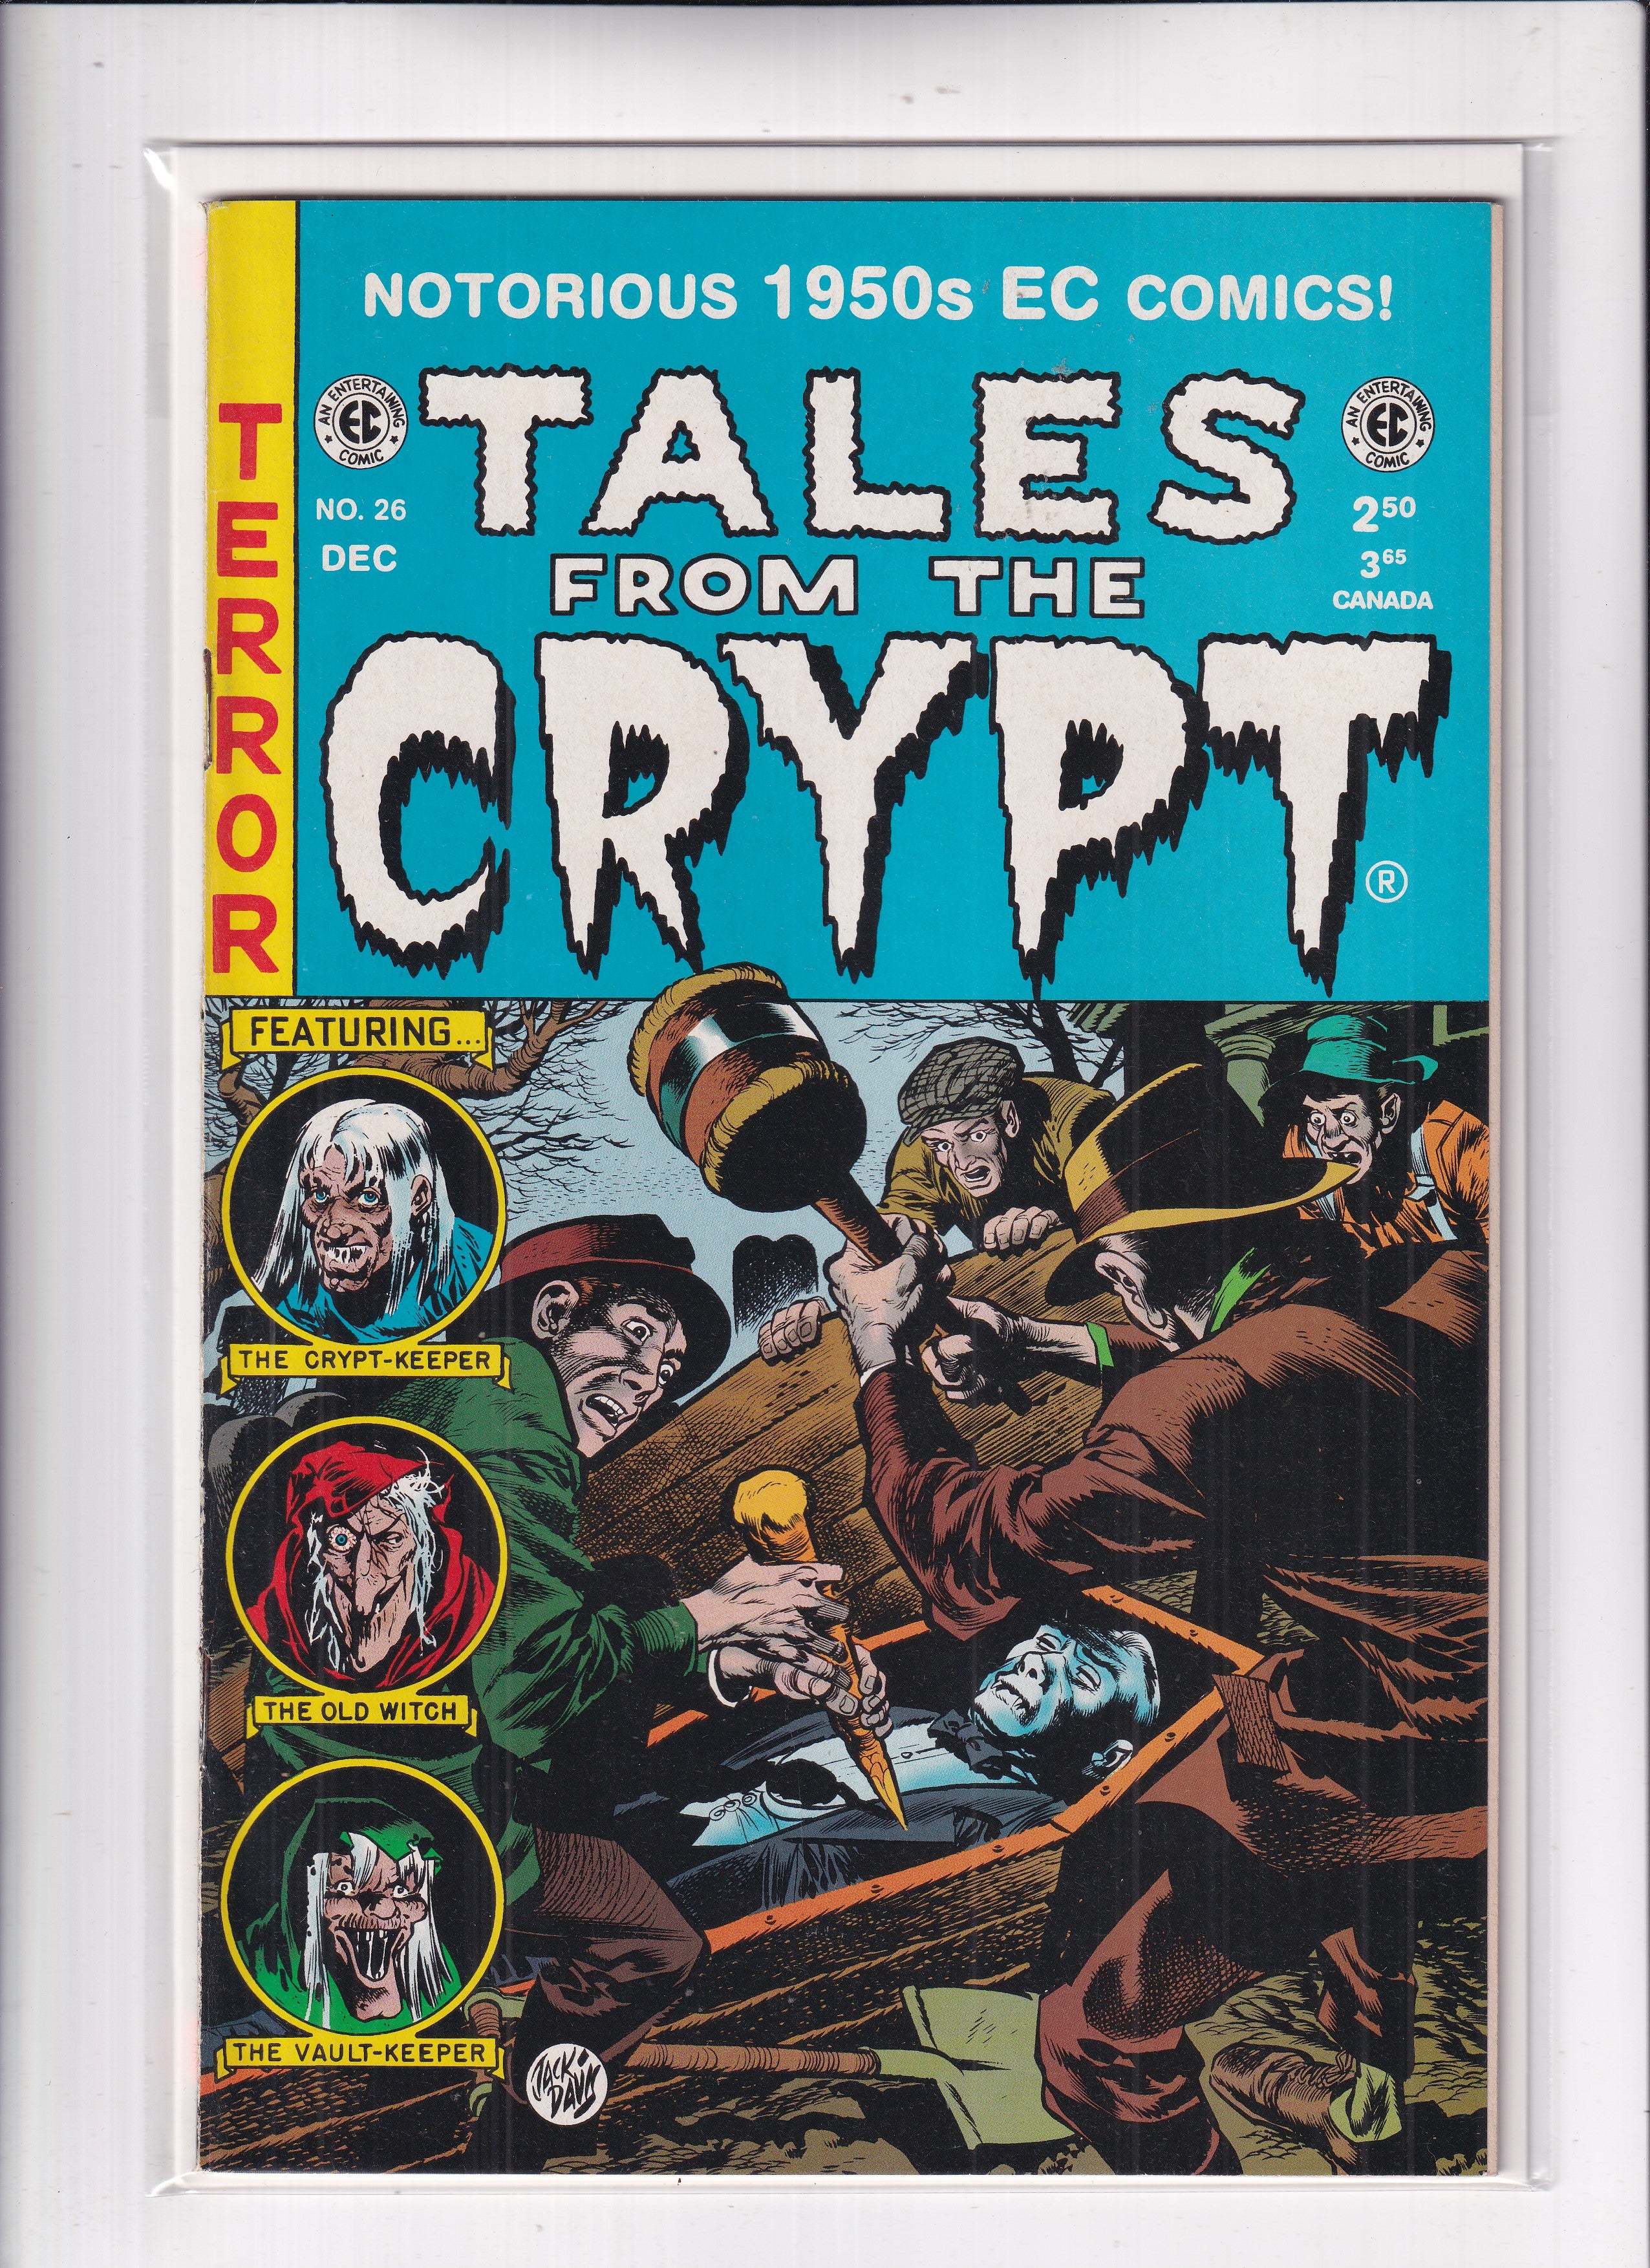 TALES FROM THE CRYPT #26 EC REPRINT - Slab City Comics 